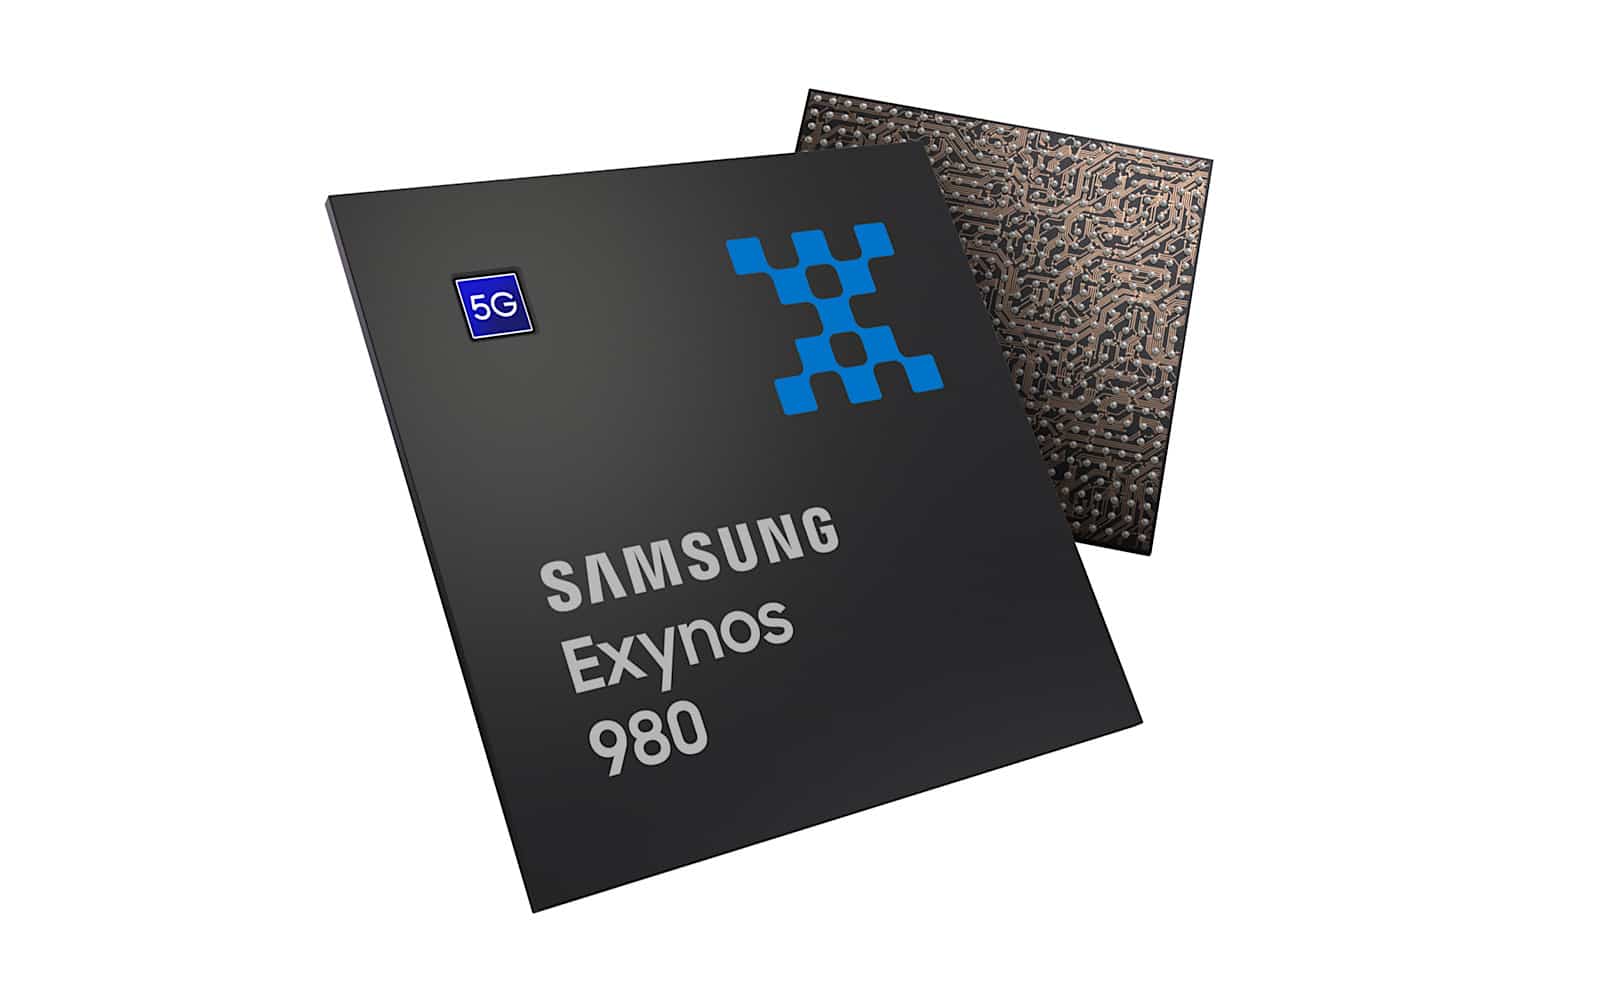 Samsung Exynos 980 with 5G